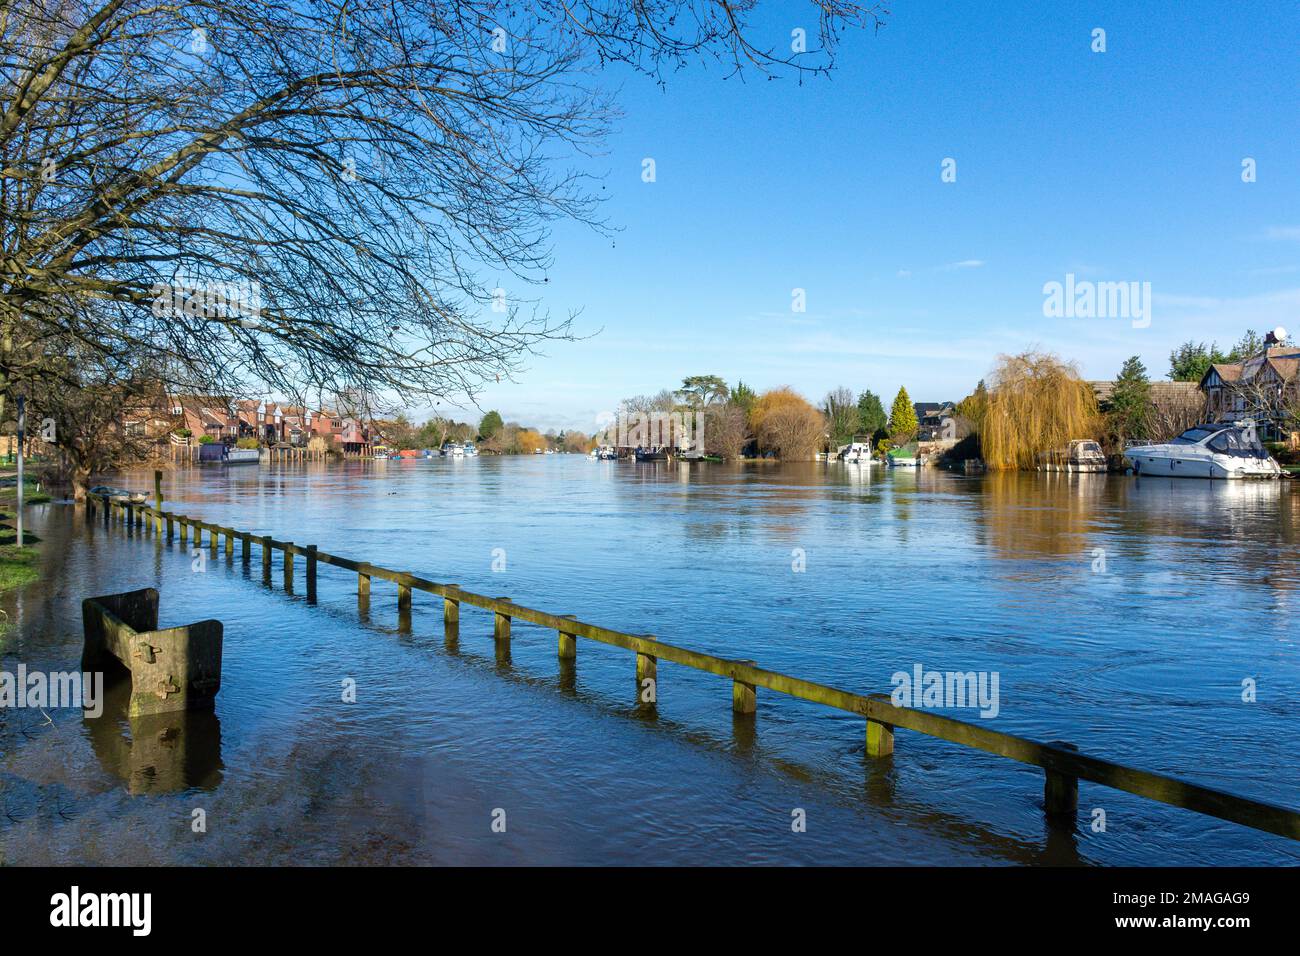 Flooding on River Thames on Thames Path, Old Windsor, Berkshire, England, United Kingdom Stock Photo